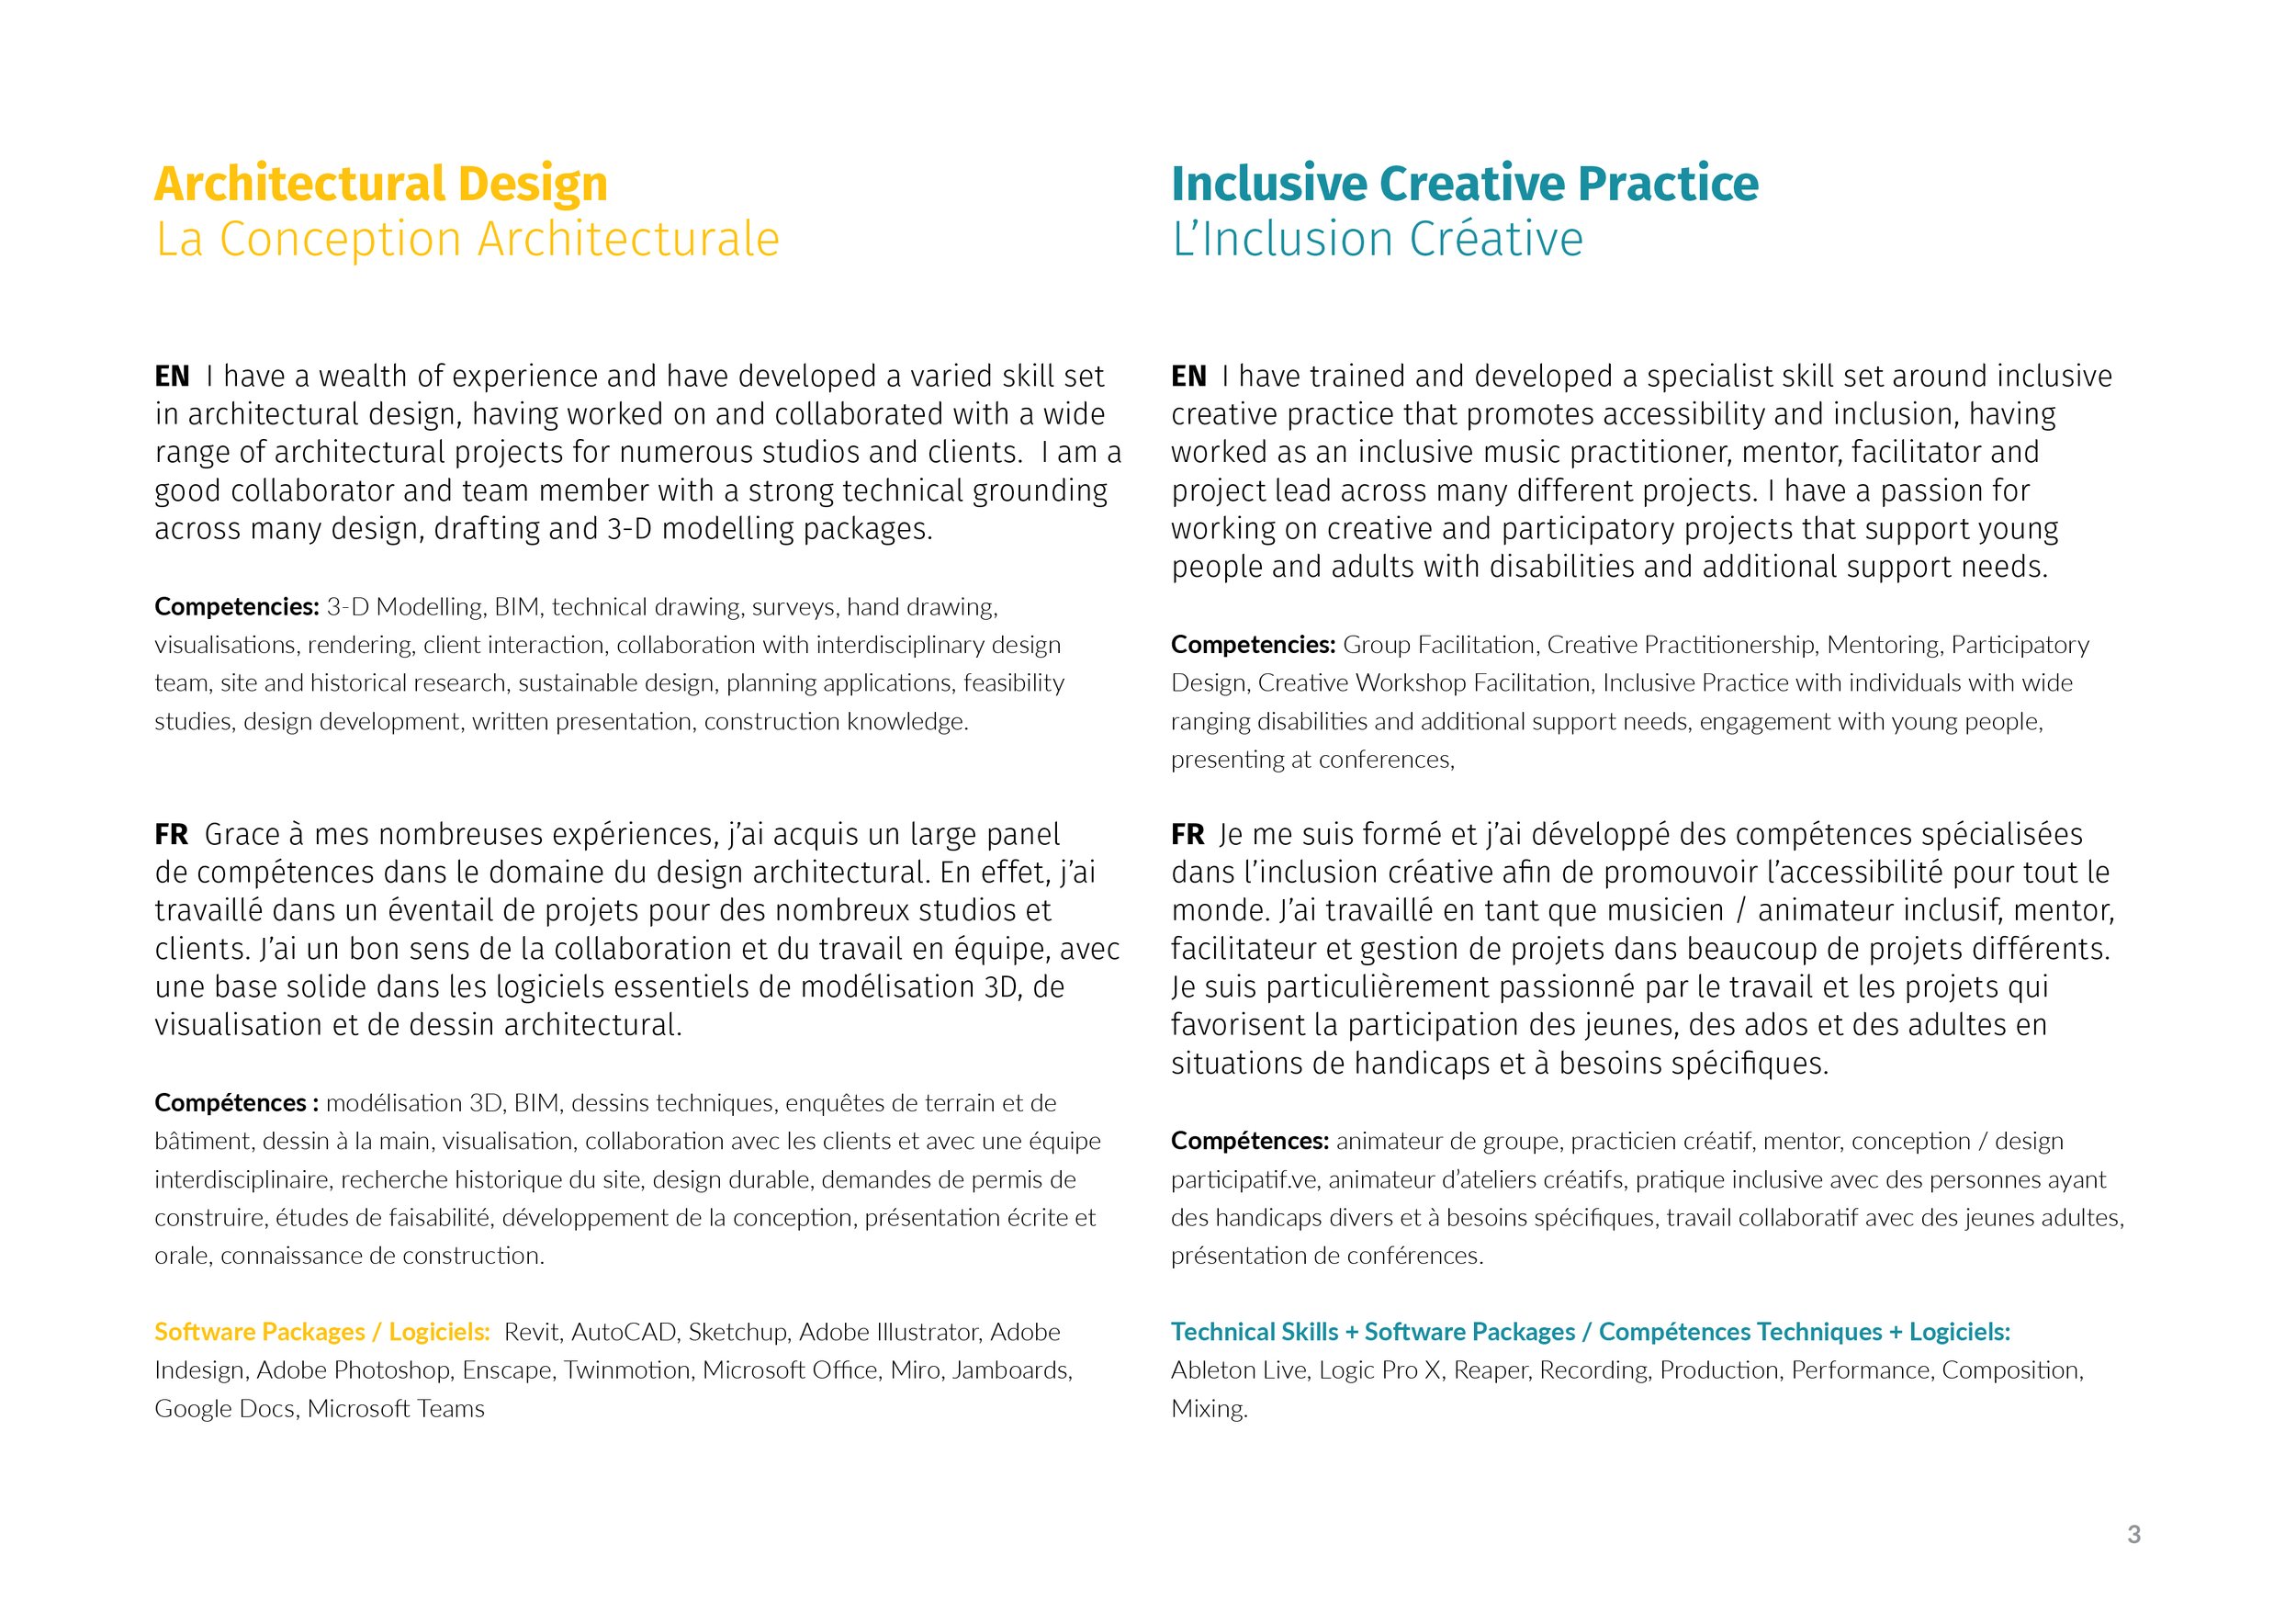 Architecture and Inclusive Creative Practice_Portfolio_Thomas Brumby_2304183.jpg